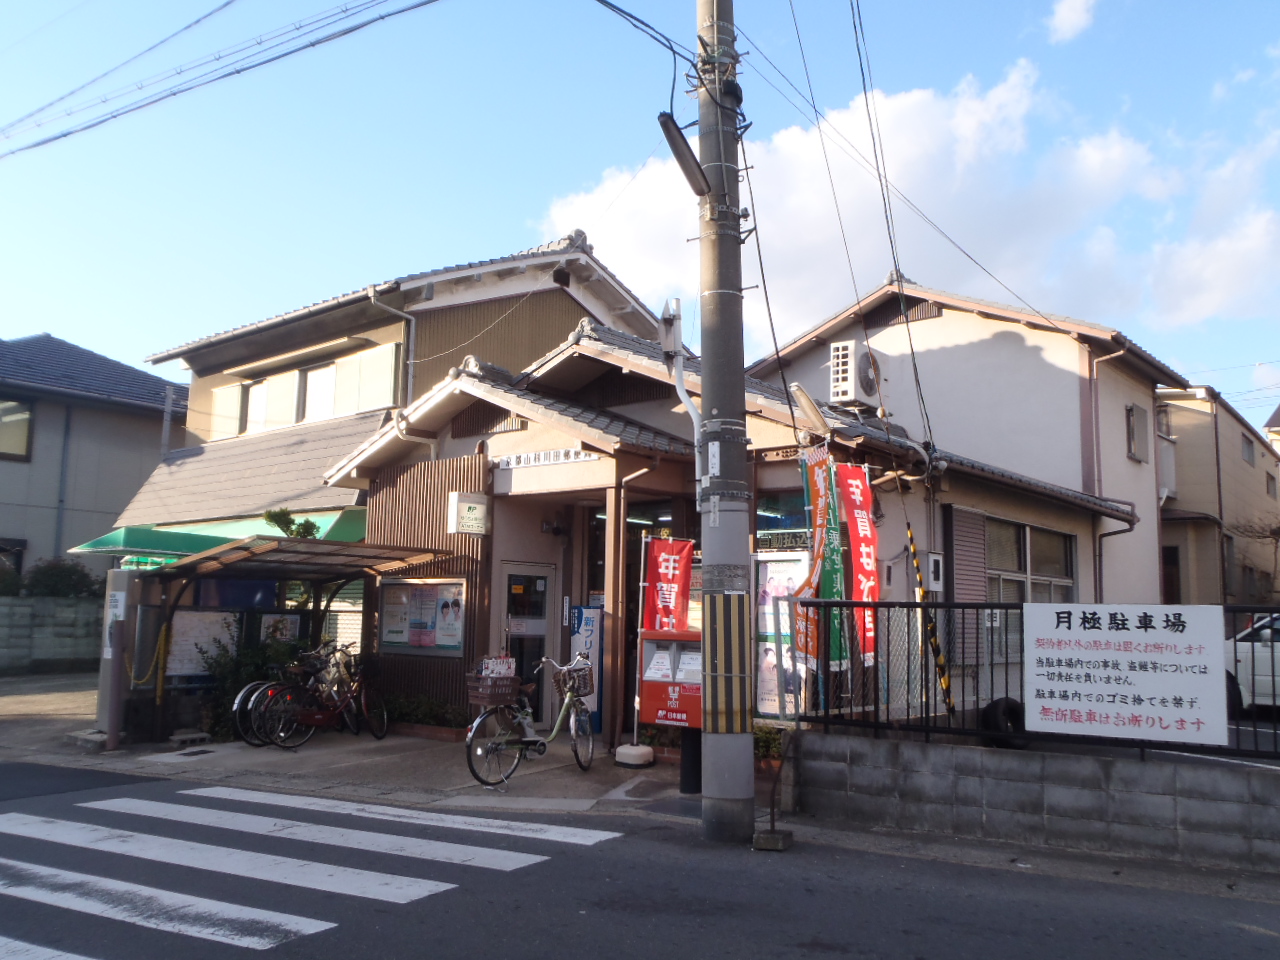 post office. Yamashina Kawada post office until the (post office) 760m